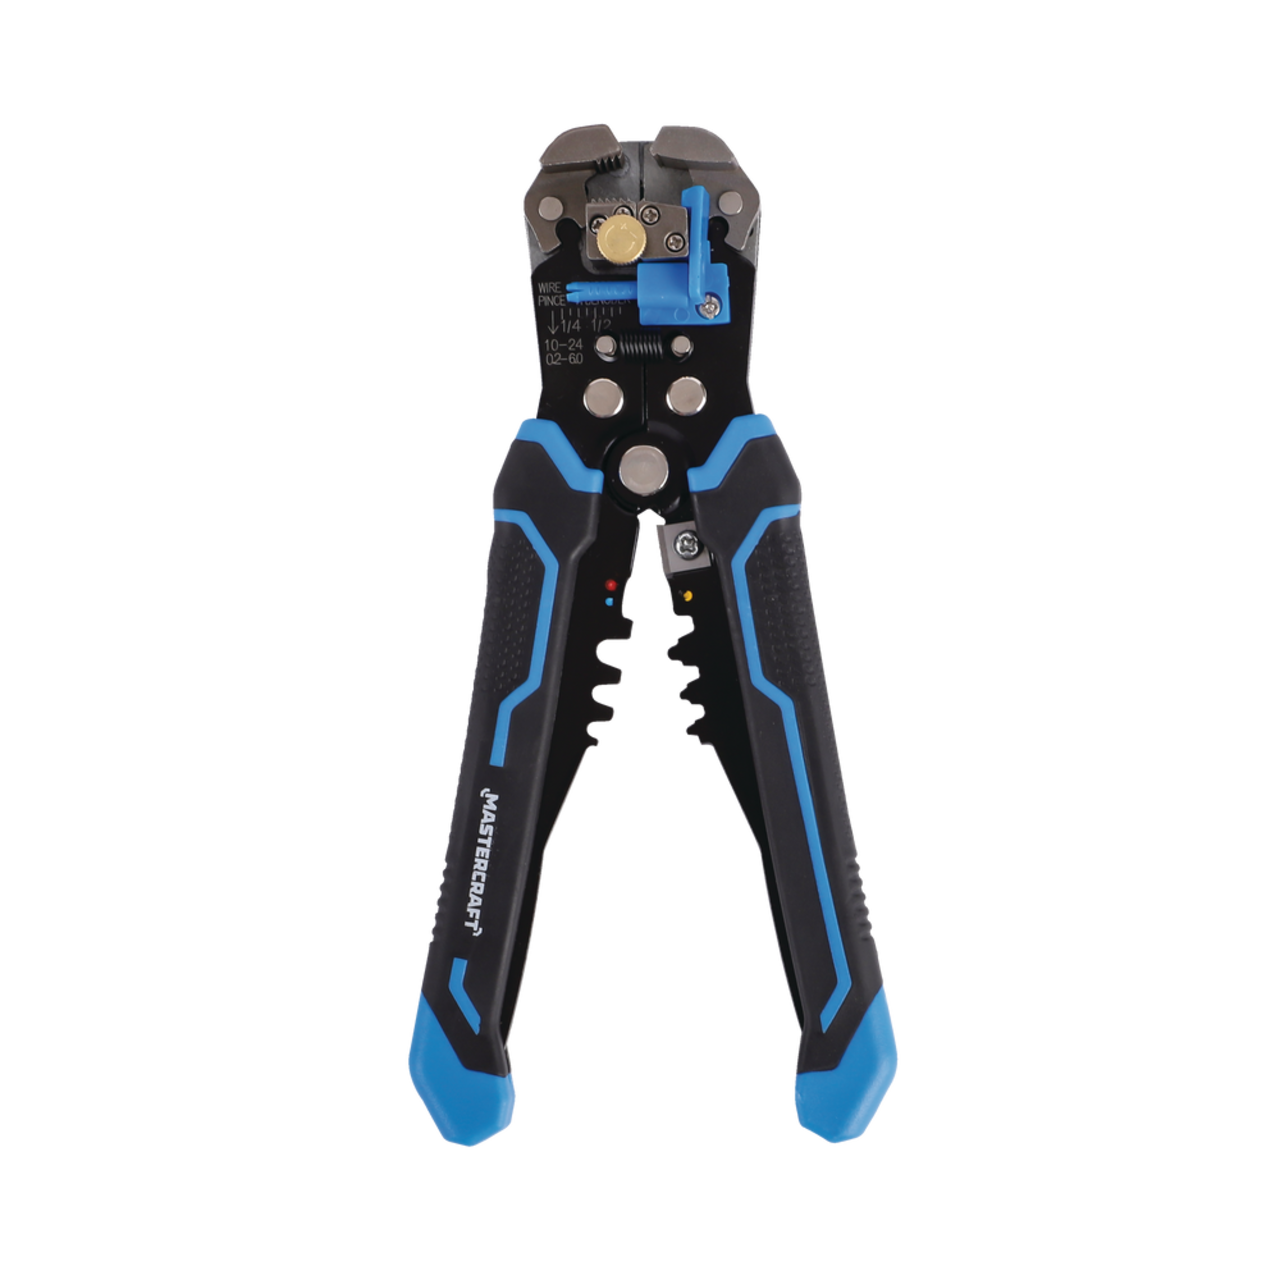 Mastercraft 10-22 Gauge Automatic Self-Adjusting Wire Stripper/Crimper,  Comfort Grip Handles